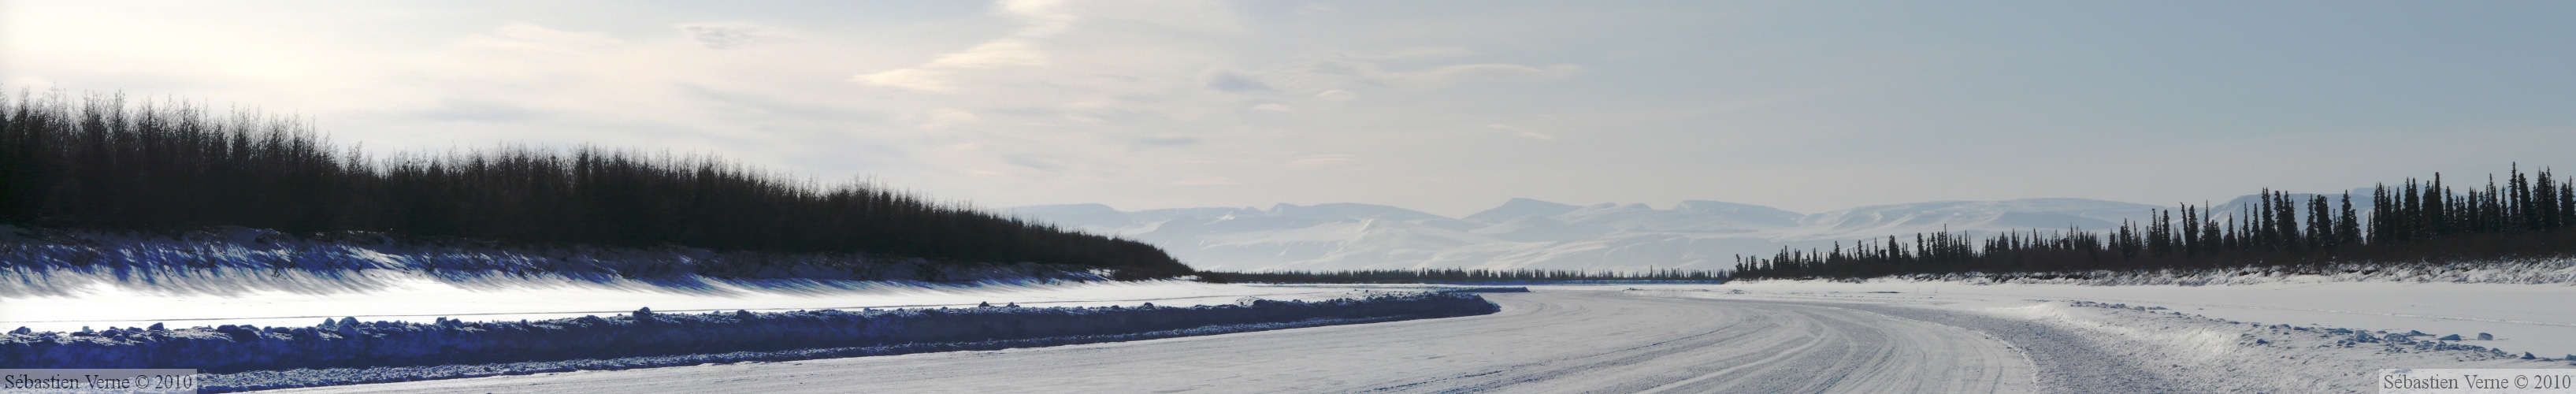 P1210638-Panorama Dempster Winter 50.jpg